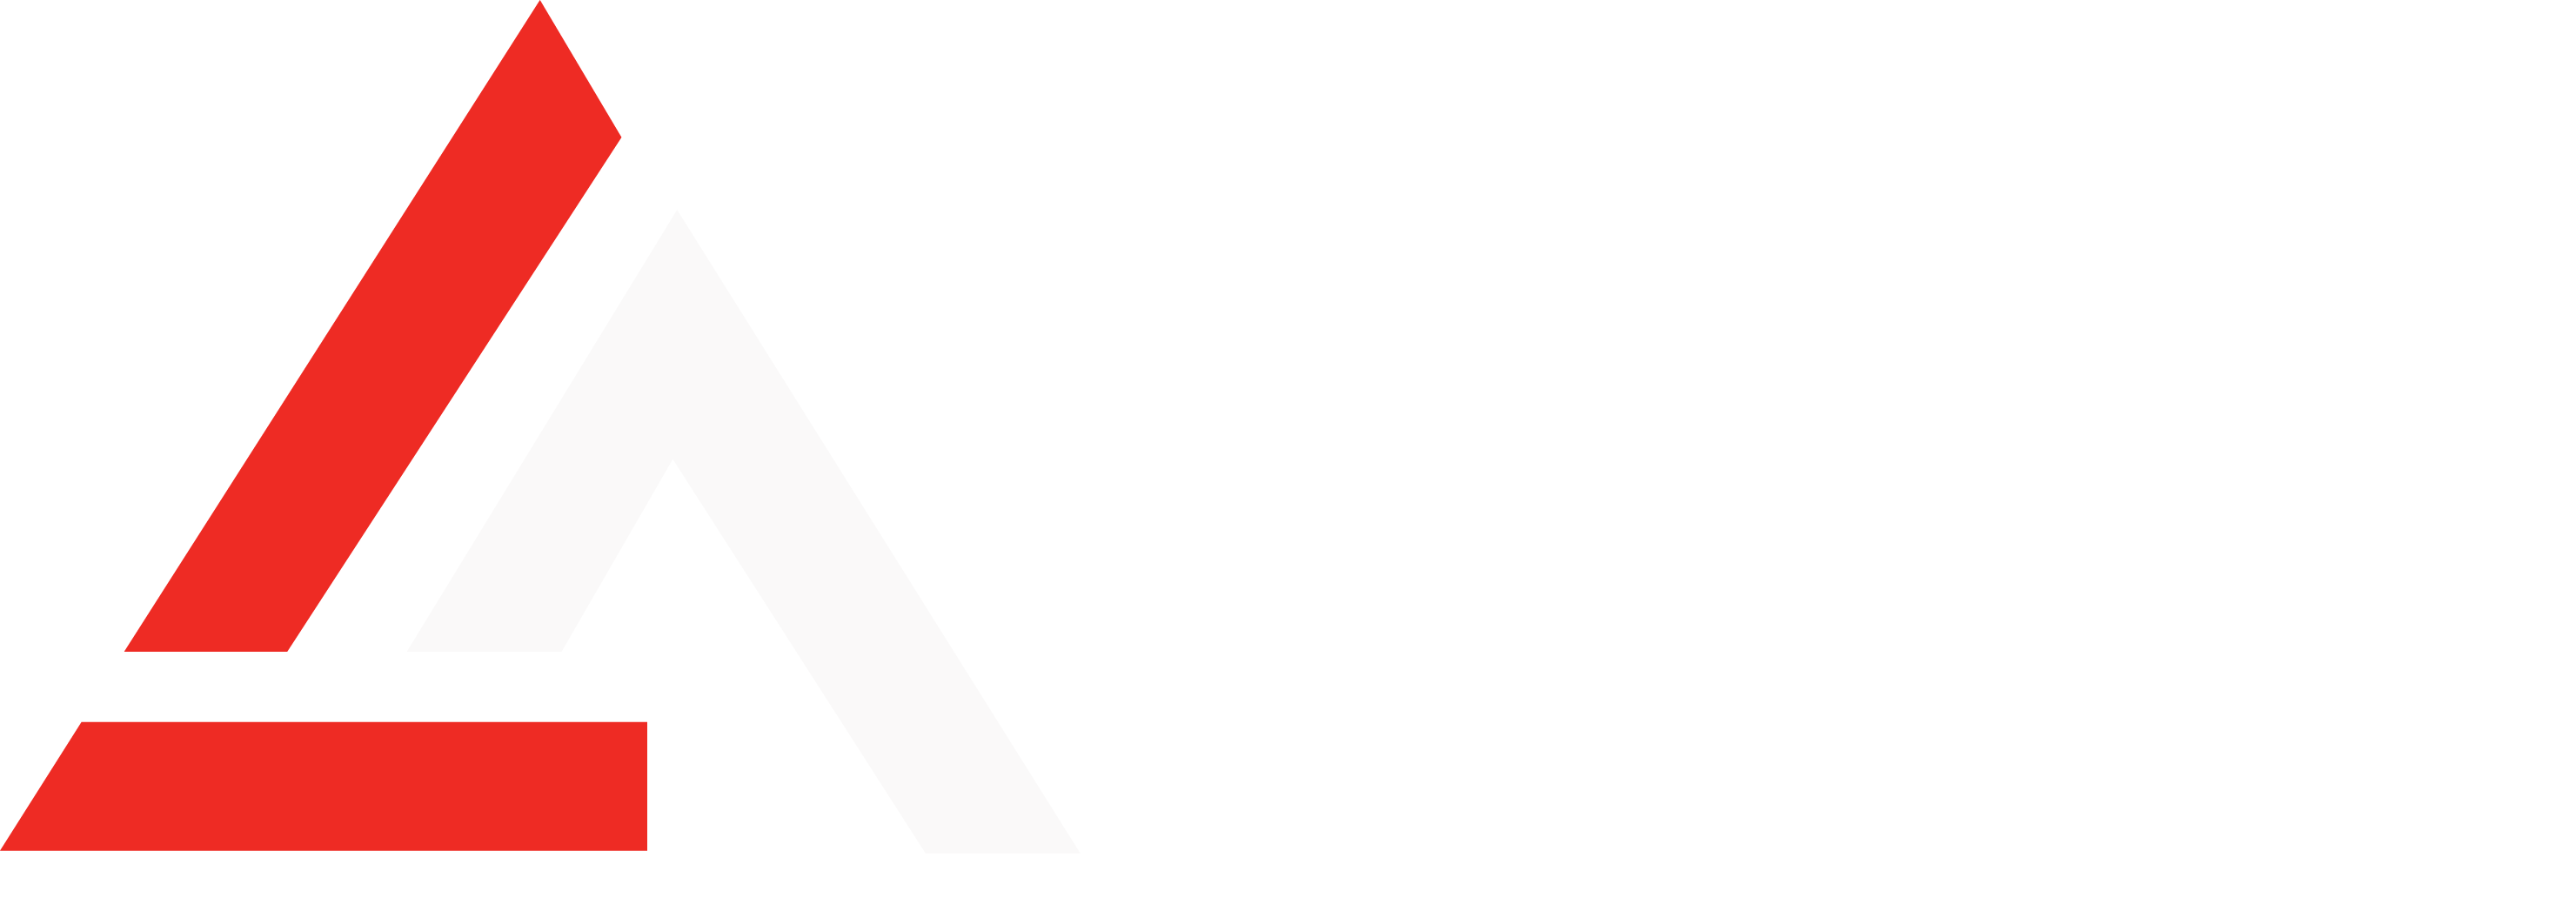 Lanka Automation logo with name